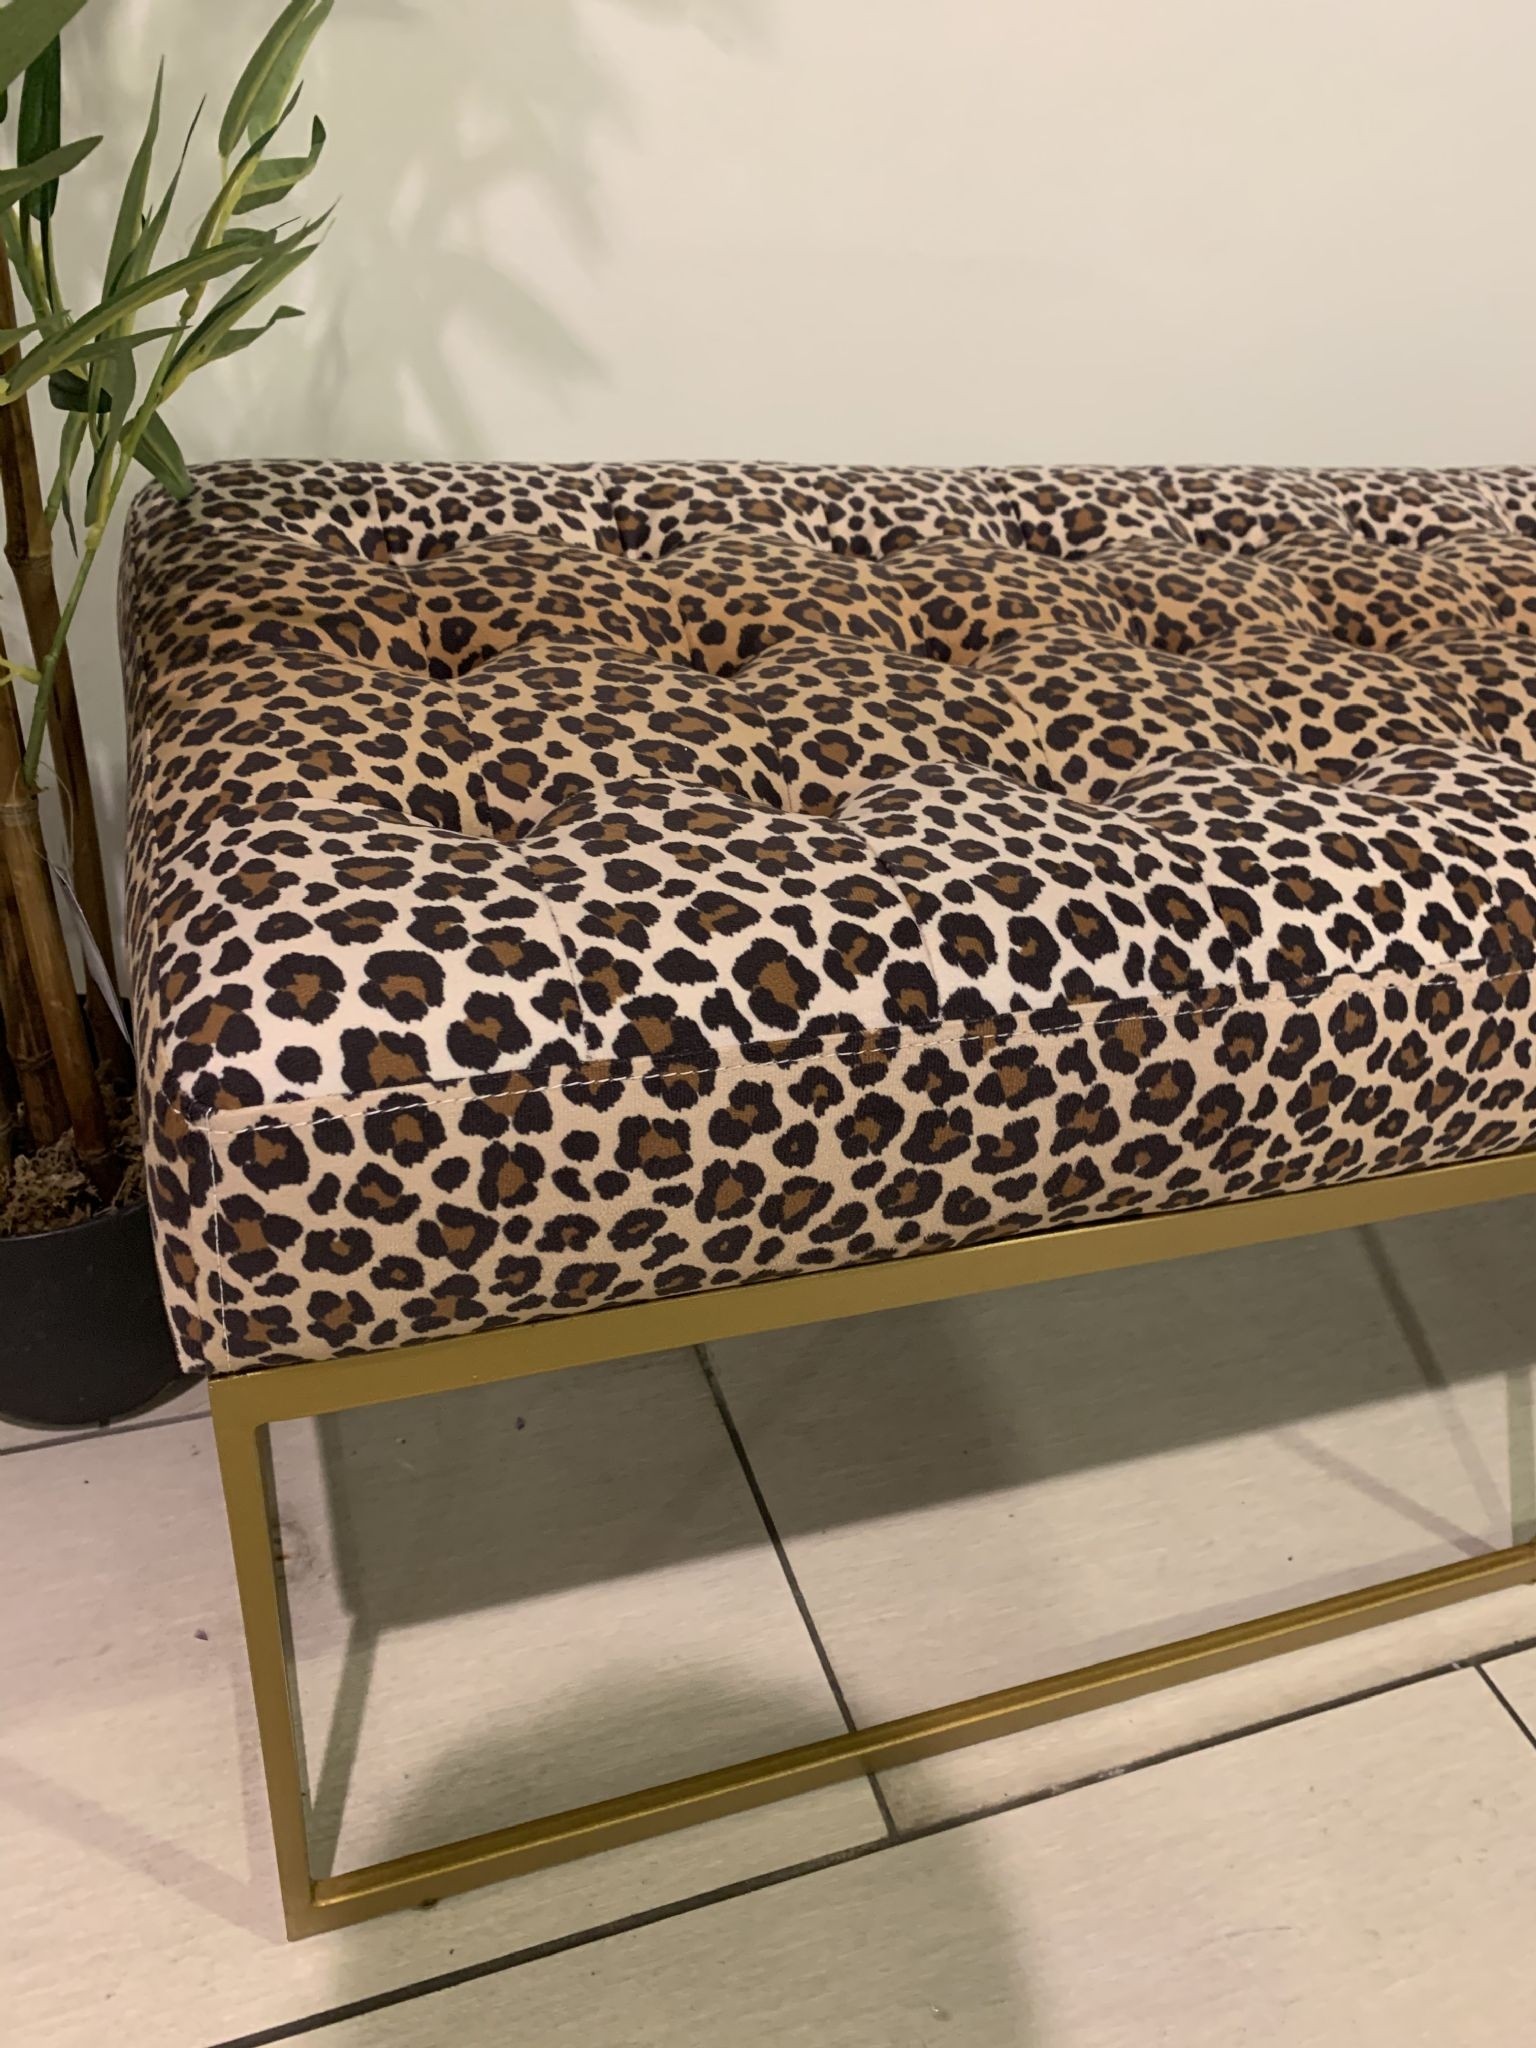 Leopard print bench seat gold leg